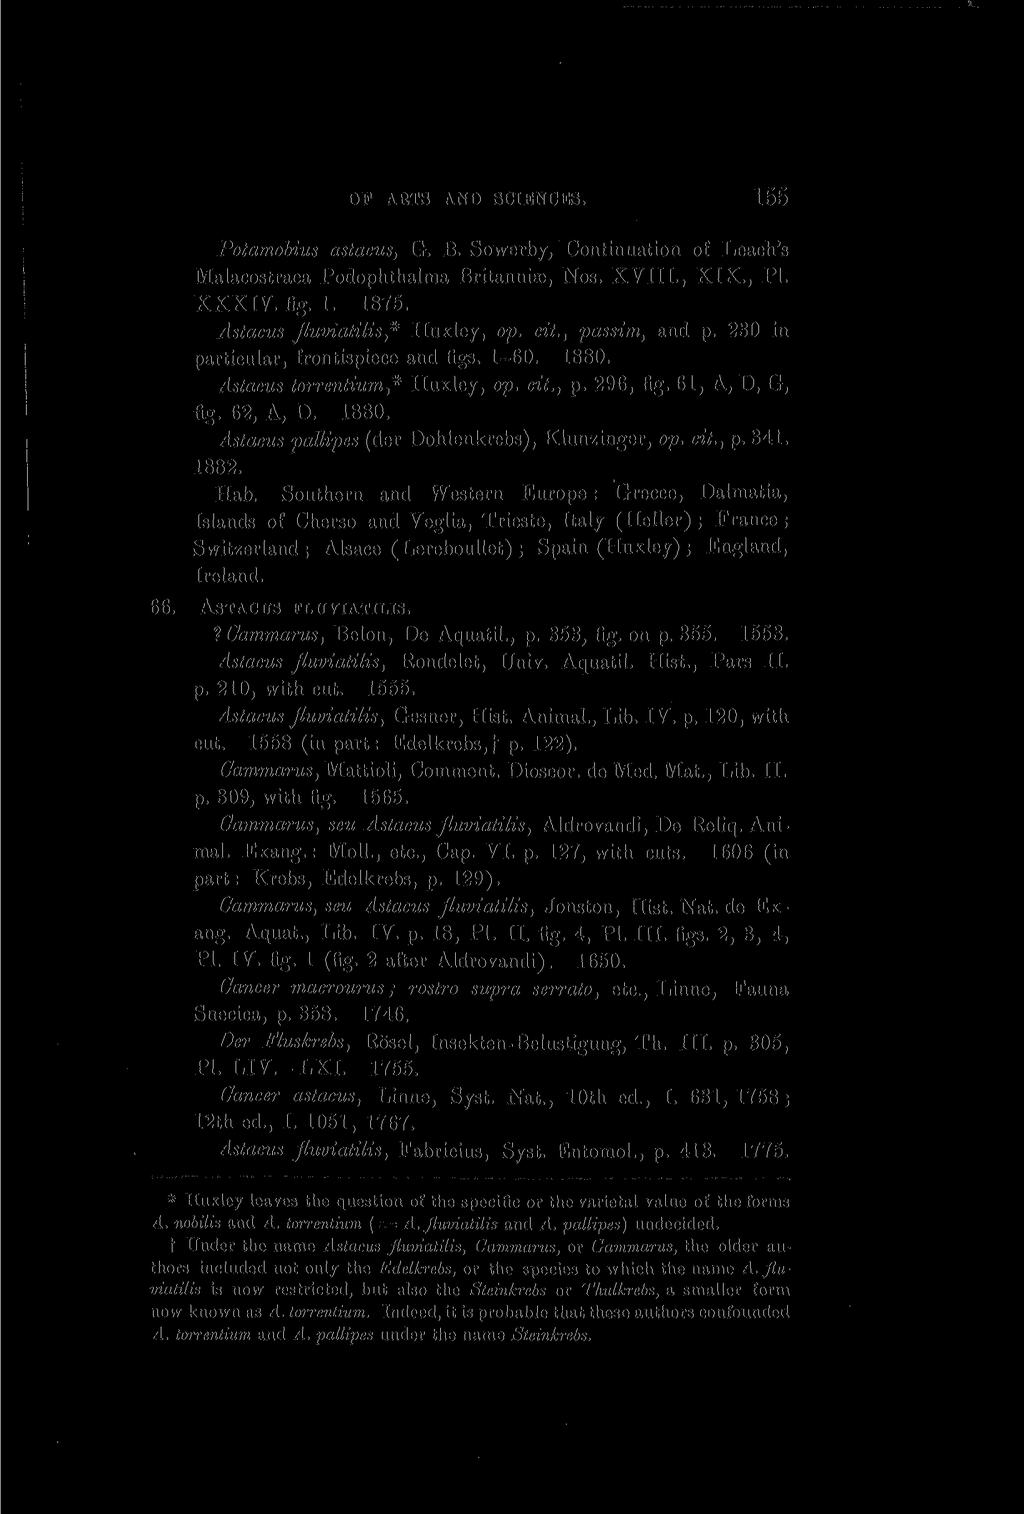 OF ARTS AND SCIENCES. 10T Potamobius astacus, G. B. Sowerby, Continuation of Leach's Malacostraca Podophthalma Britannia, Nos. XVIII., XIX., PI. XXXIV. fig. 1. 1875. Astacus fluviatilis* Huxley, op.